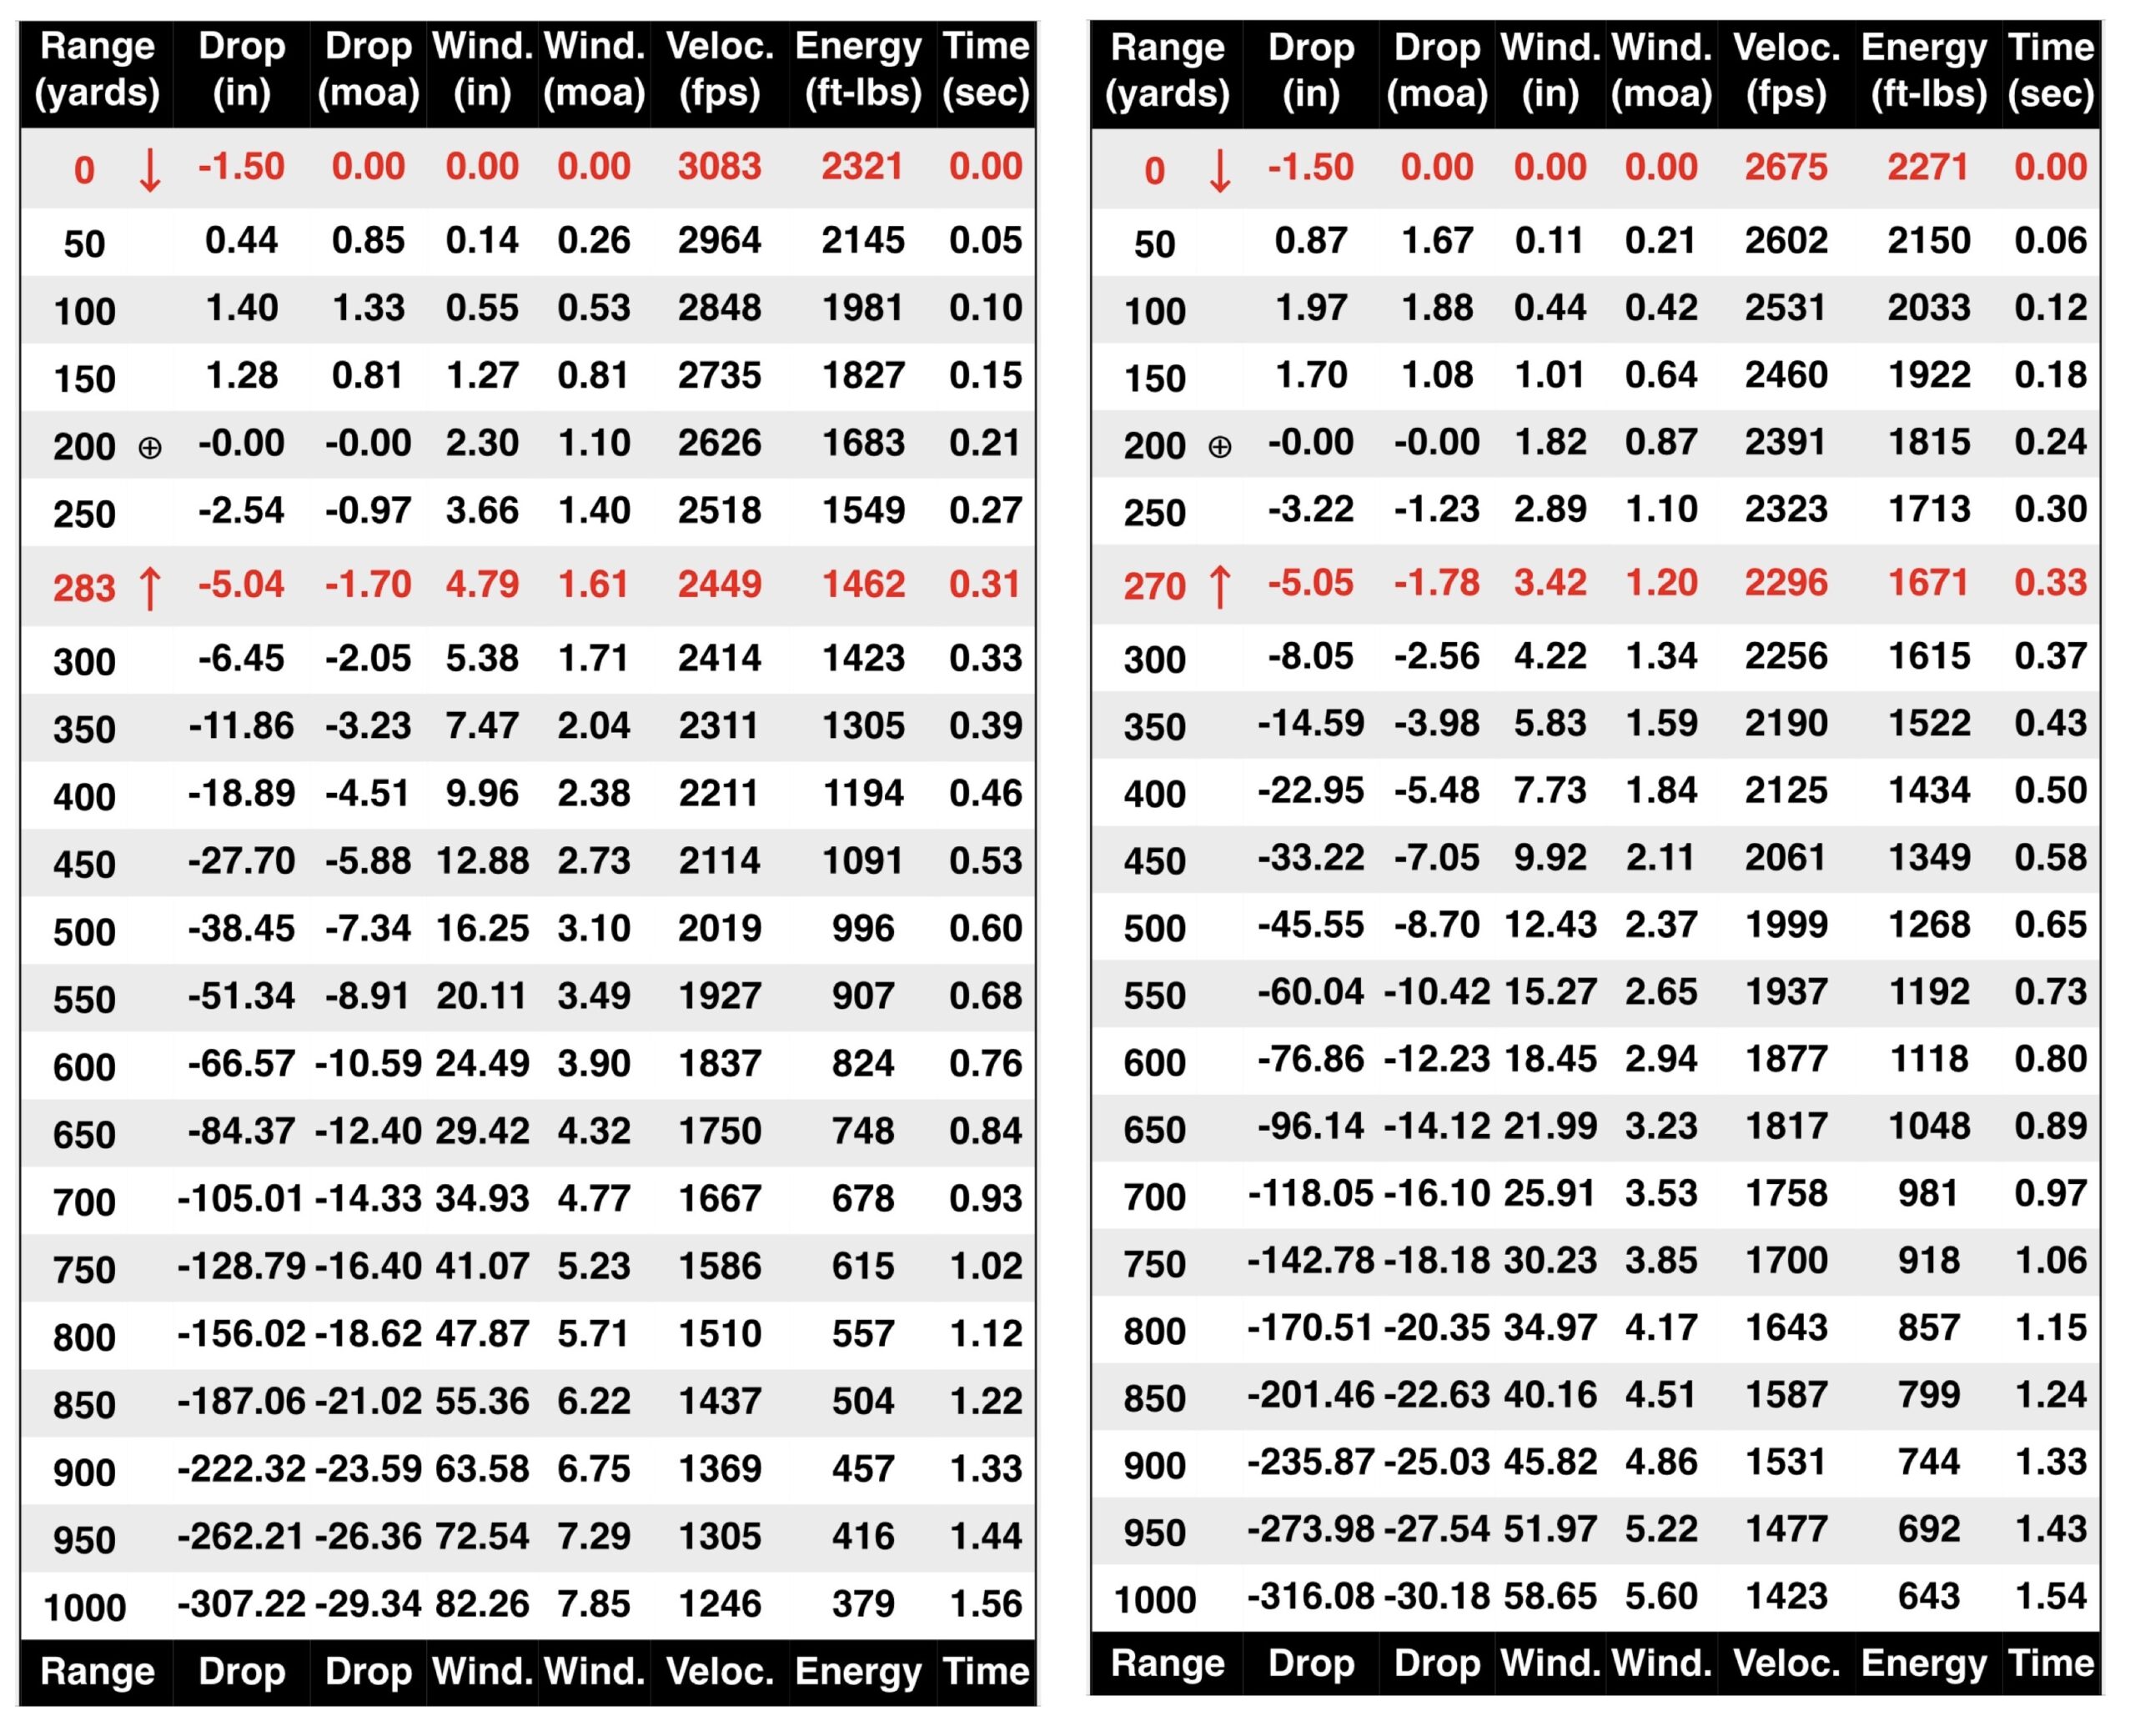 Ballistics tables comparing .25/06 and 6.5 CM loads